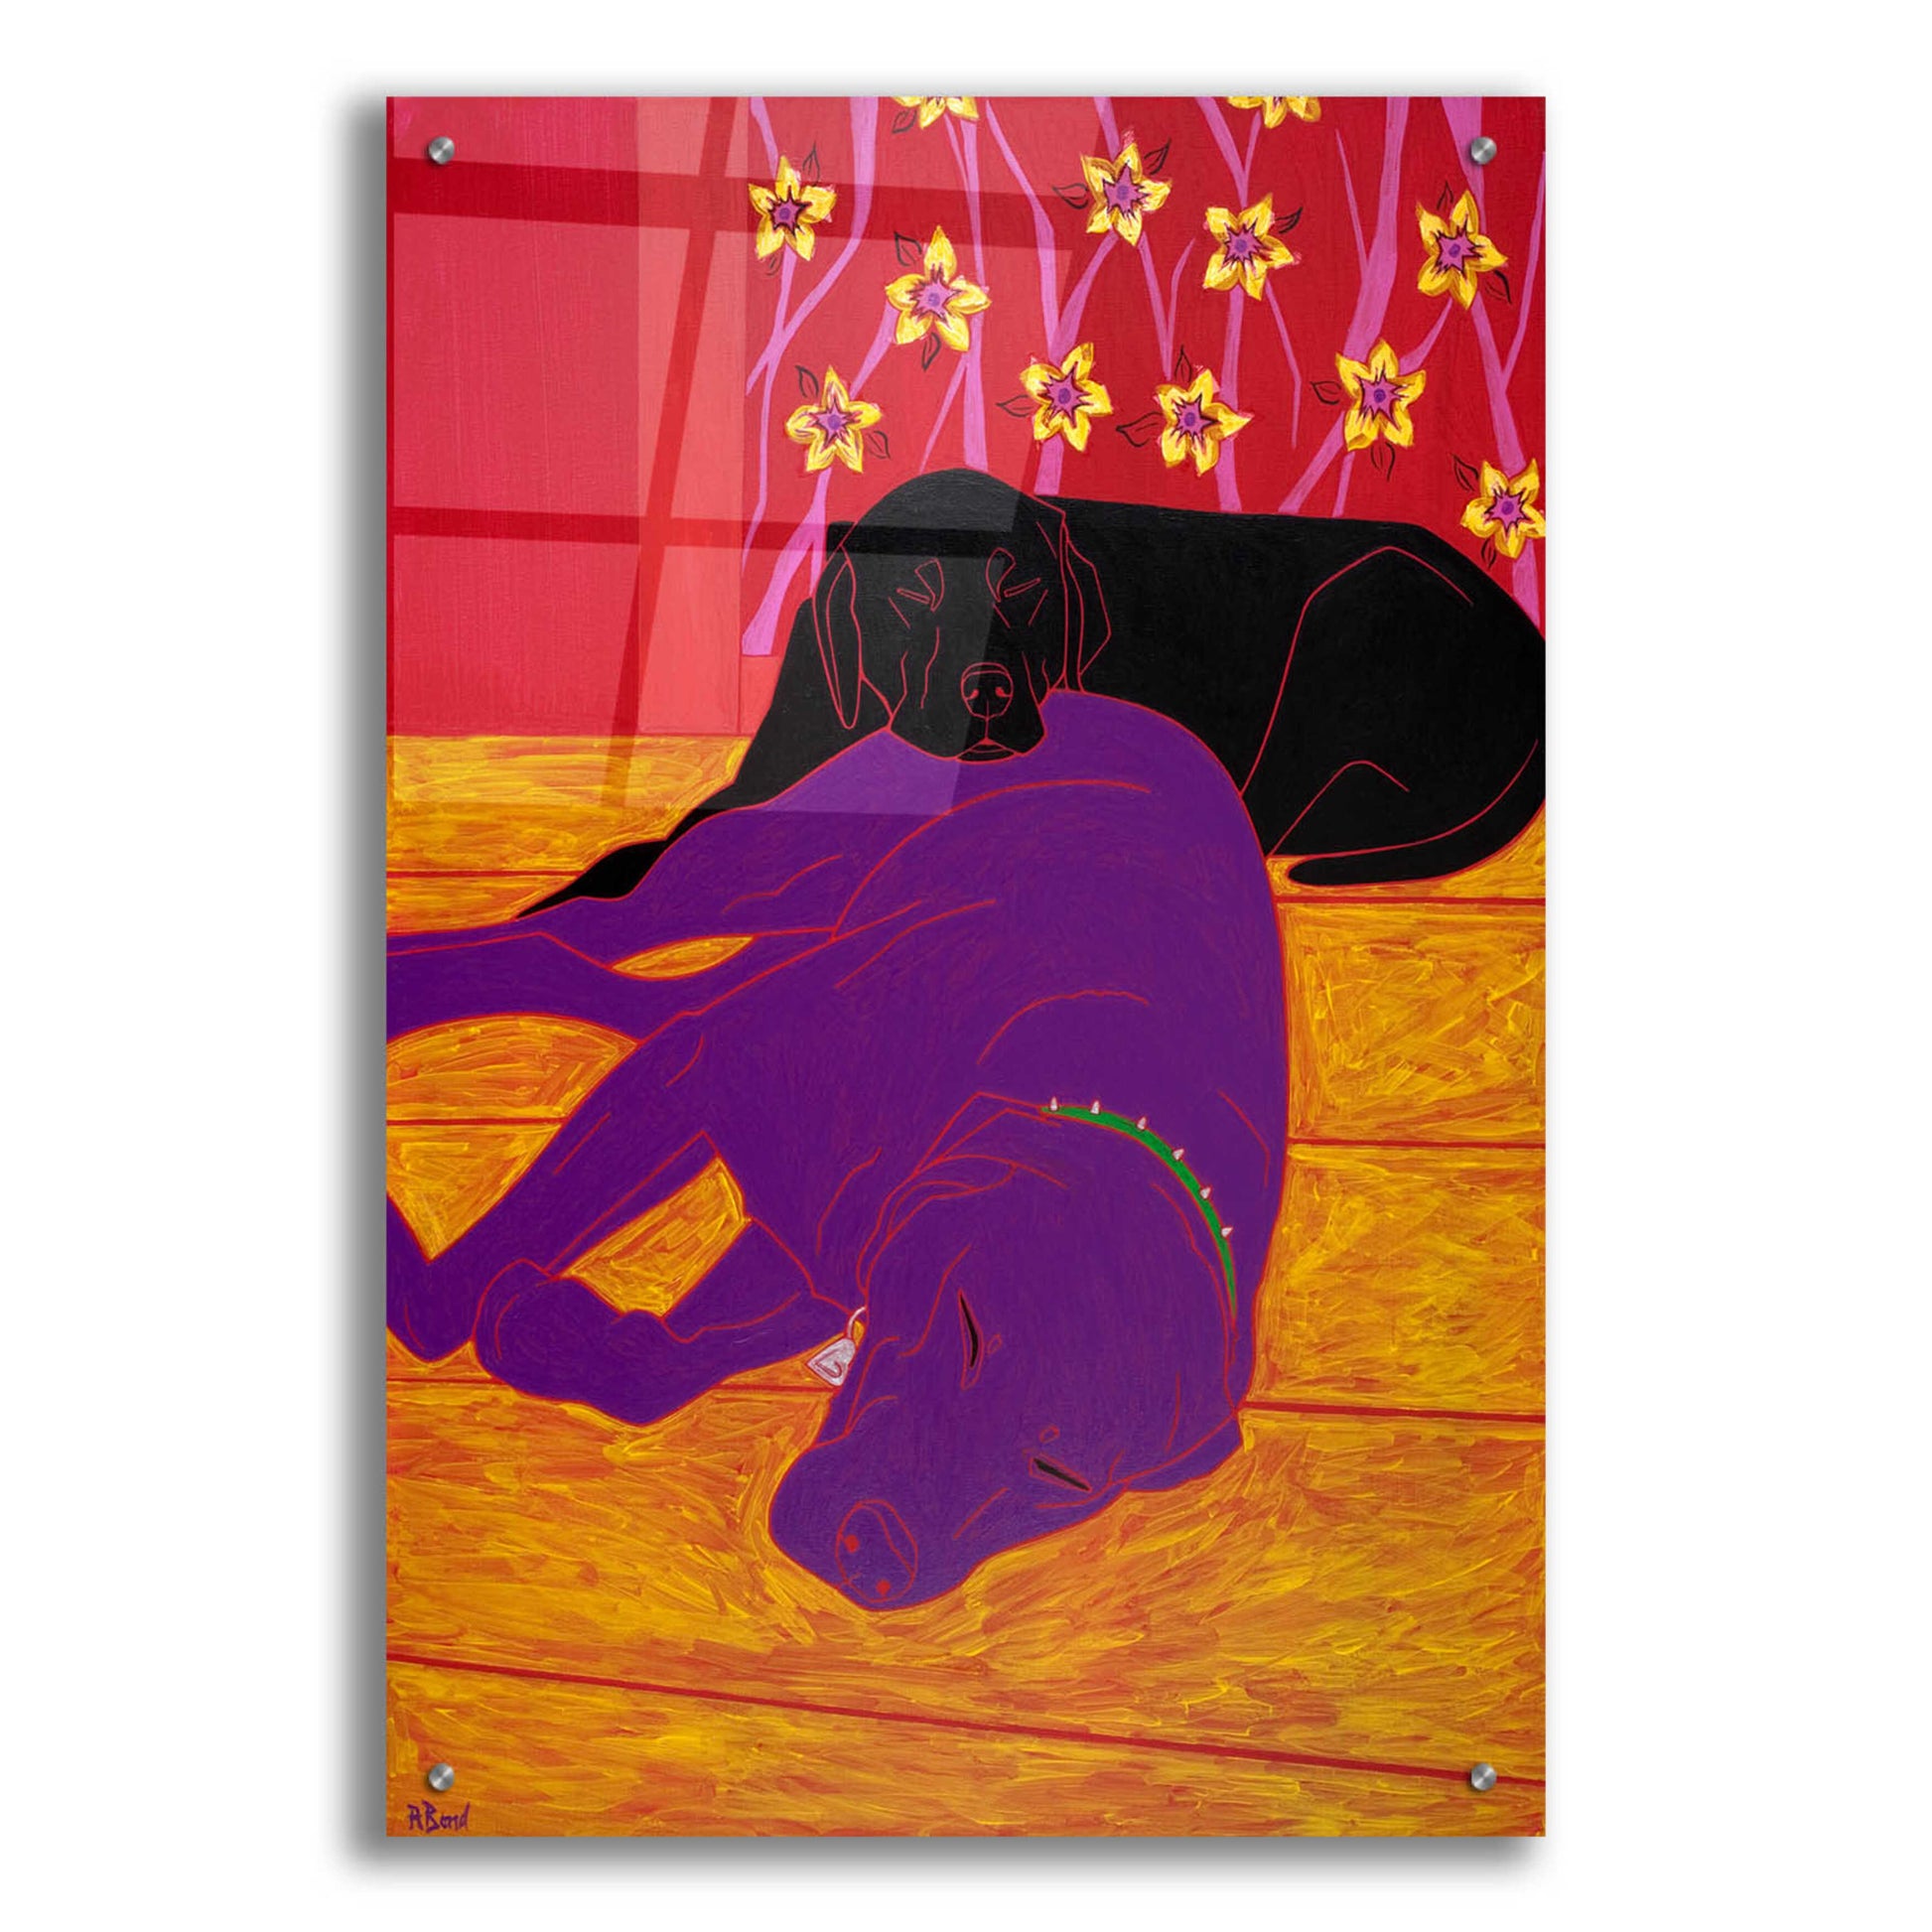 Epic Art 'Let Sleeping Dogs Lie' by Angela Bond Acrylic Glass Wall Art,24x36